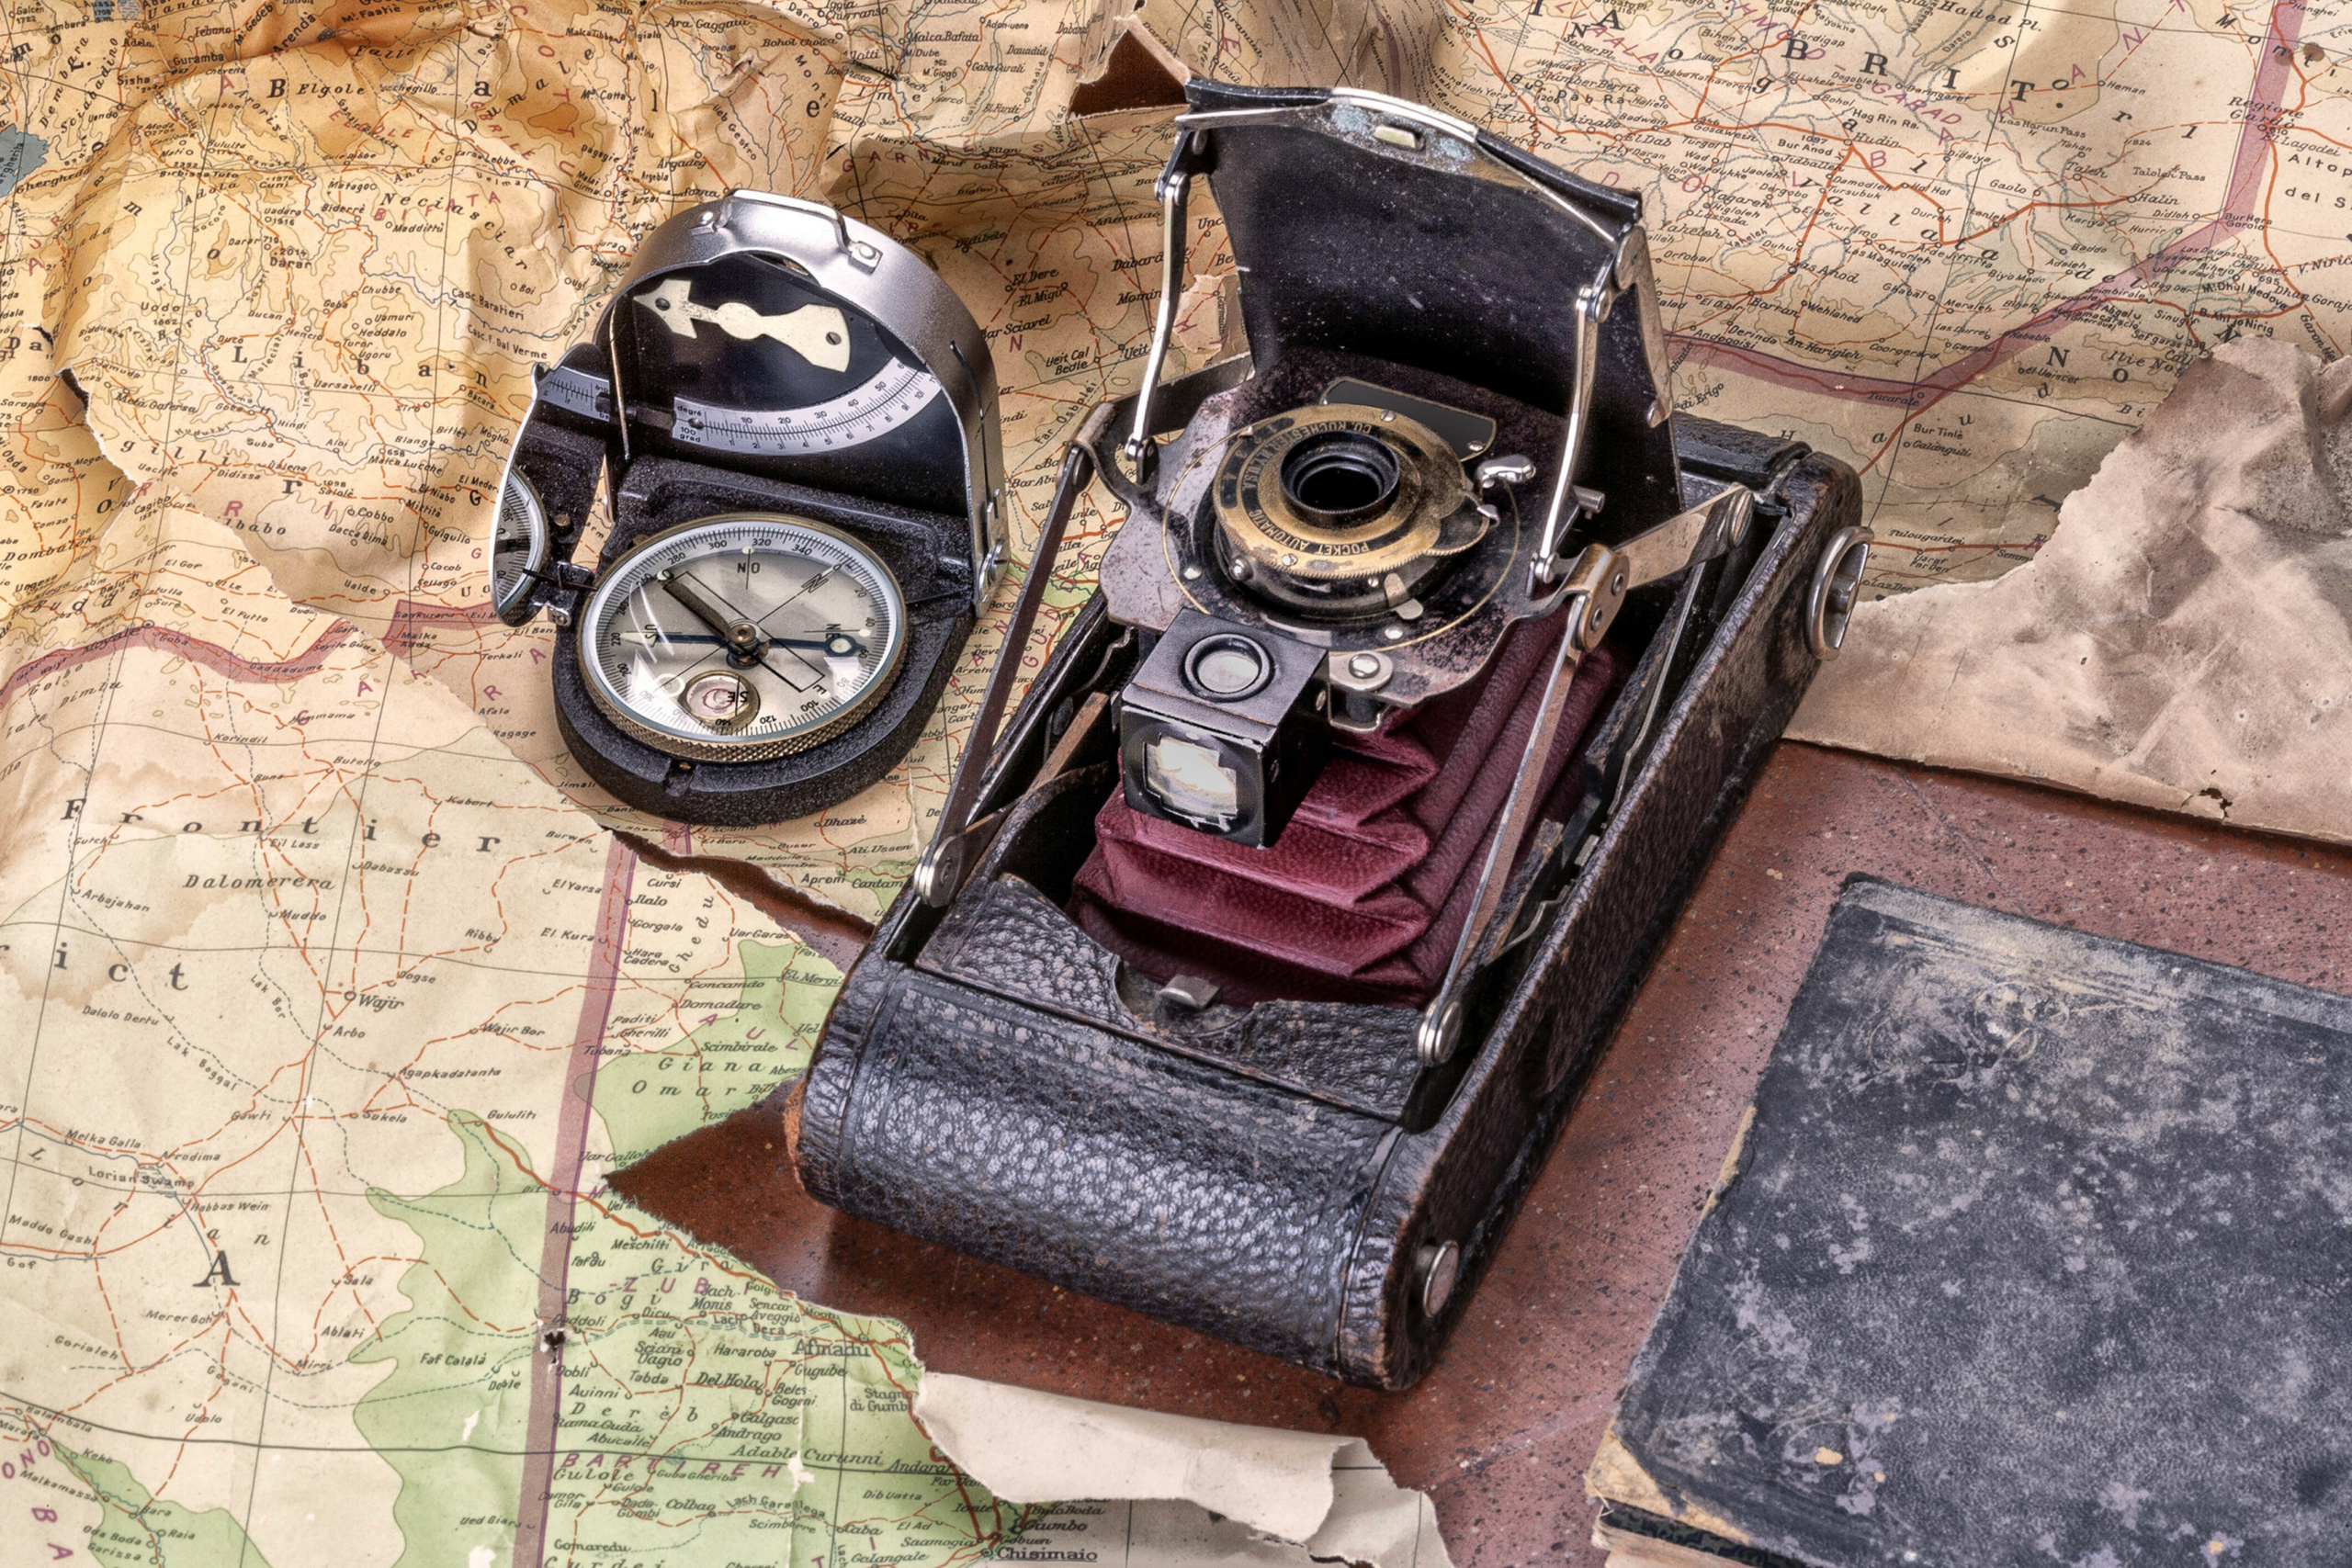 safari pack, old camera, compass and map